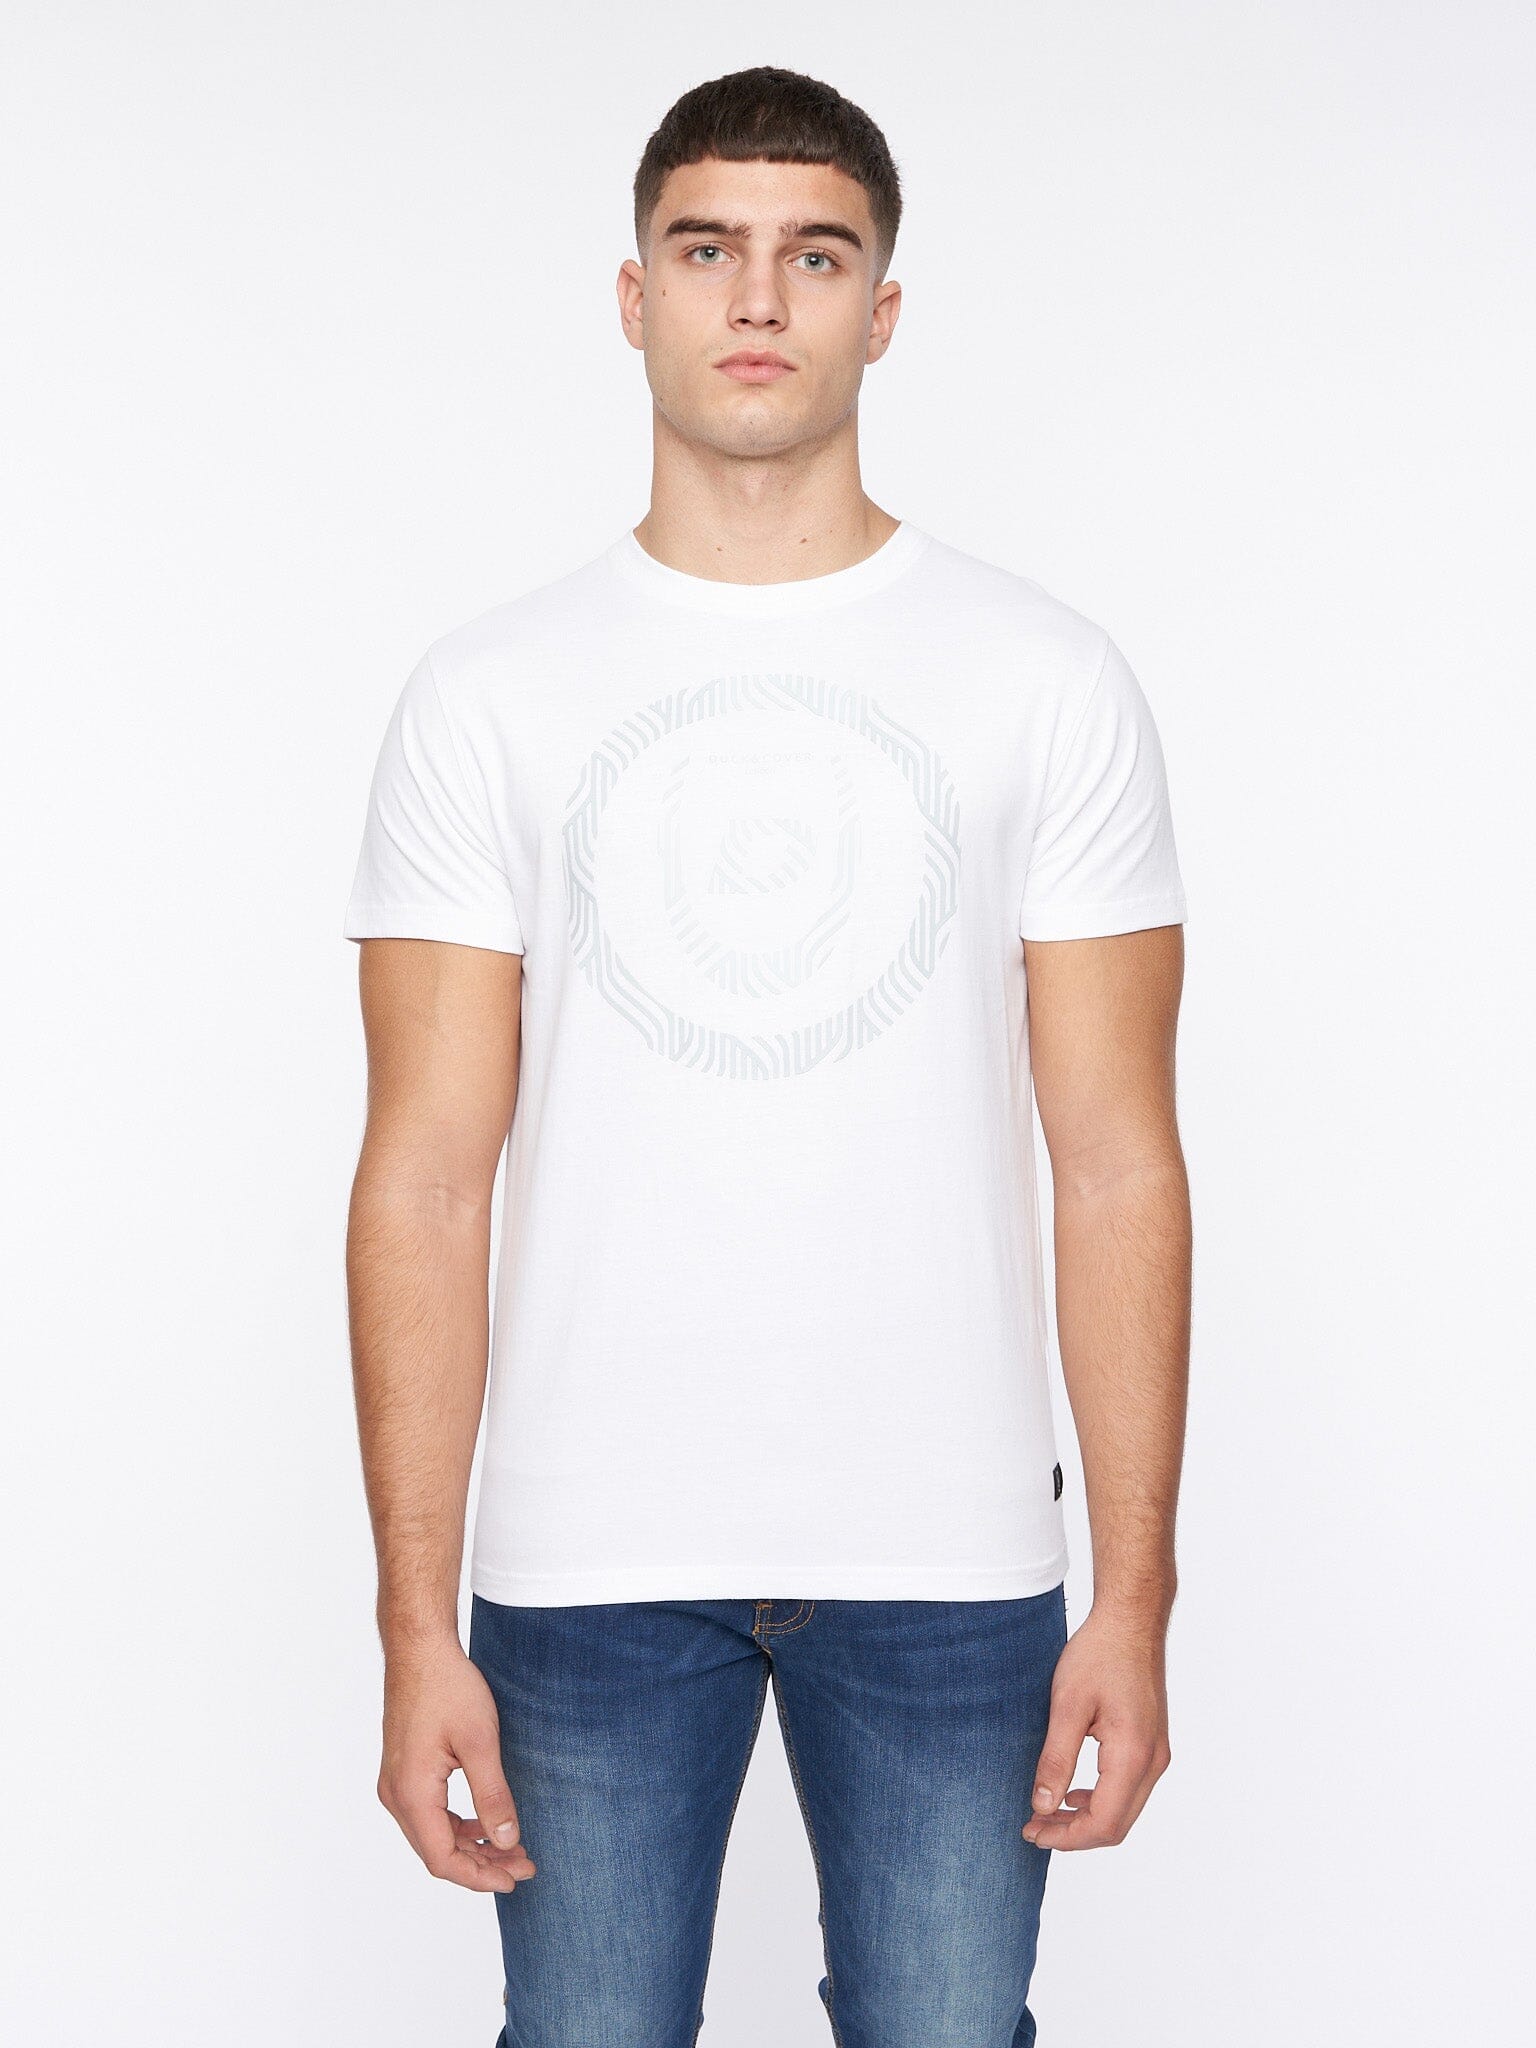 Raktore T-Shirt White